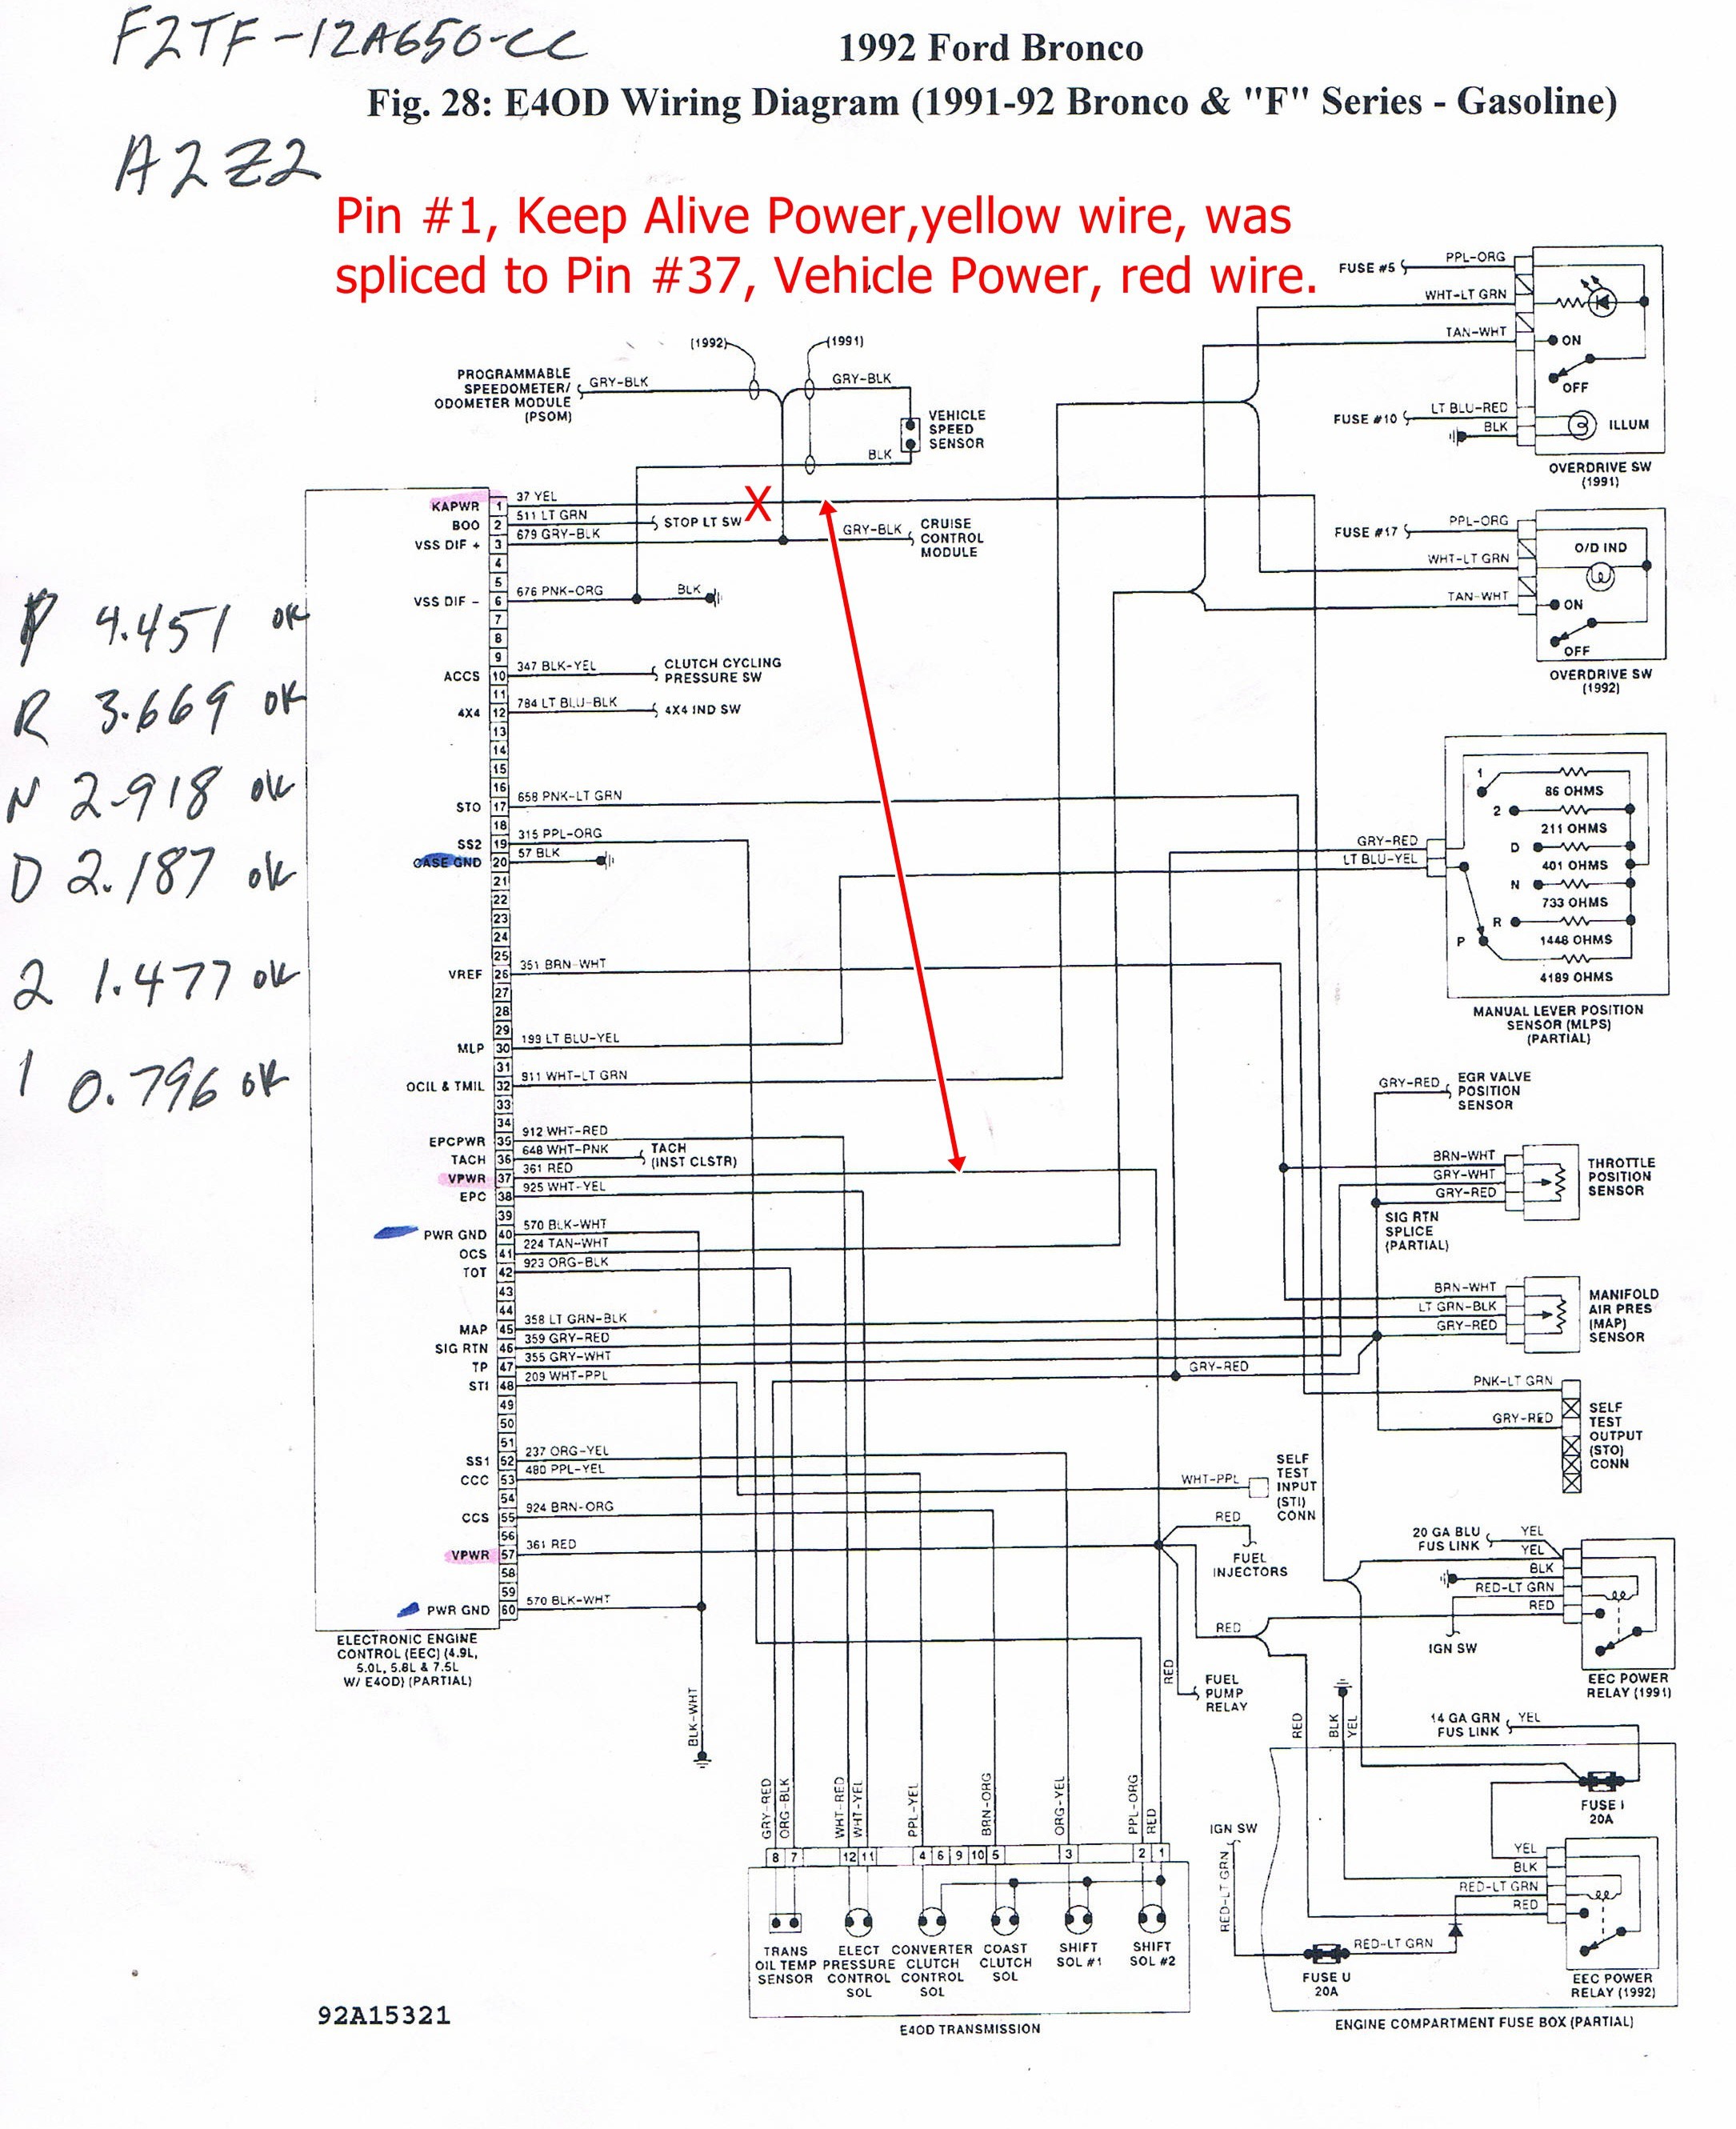 4l60e transmission wiring diagram unique 4l60e transmission fuse allison gen 4 wiring diagrams 4l60e transmission wiring